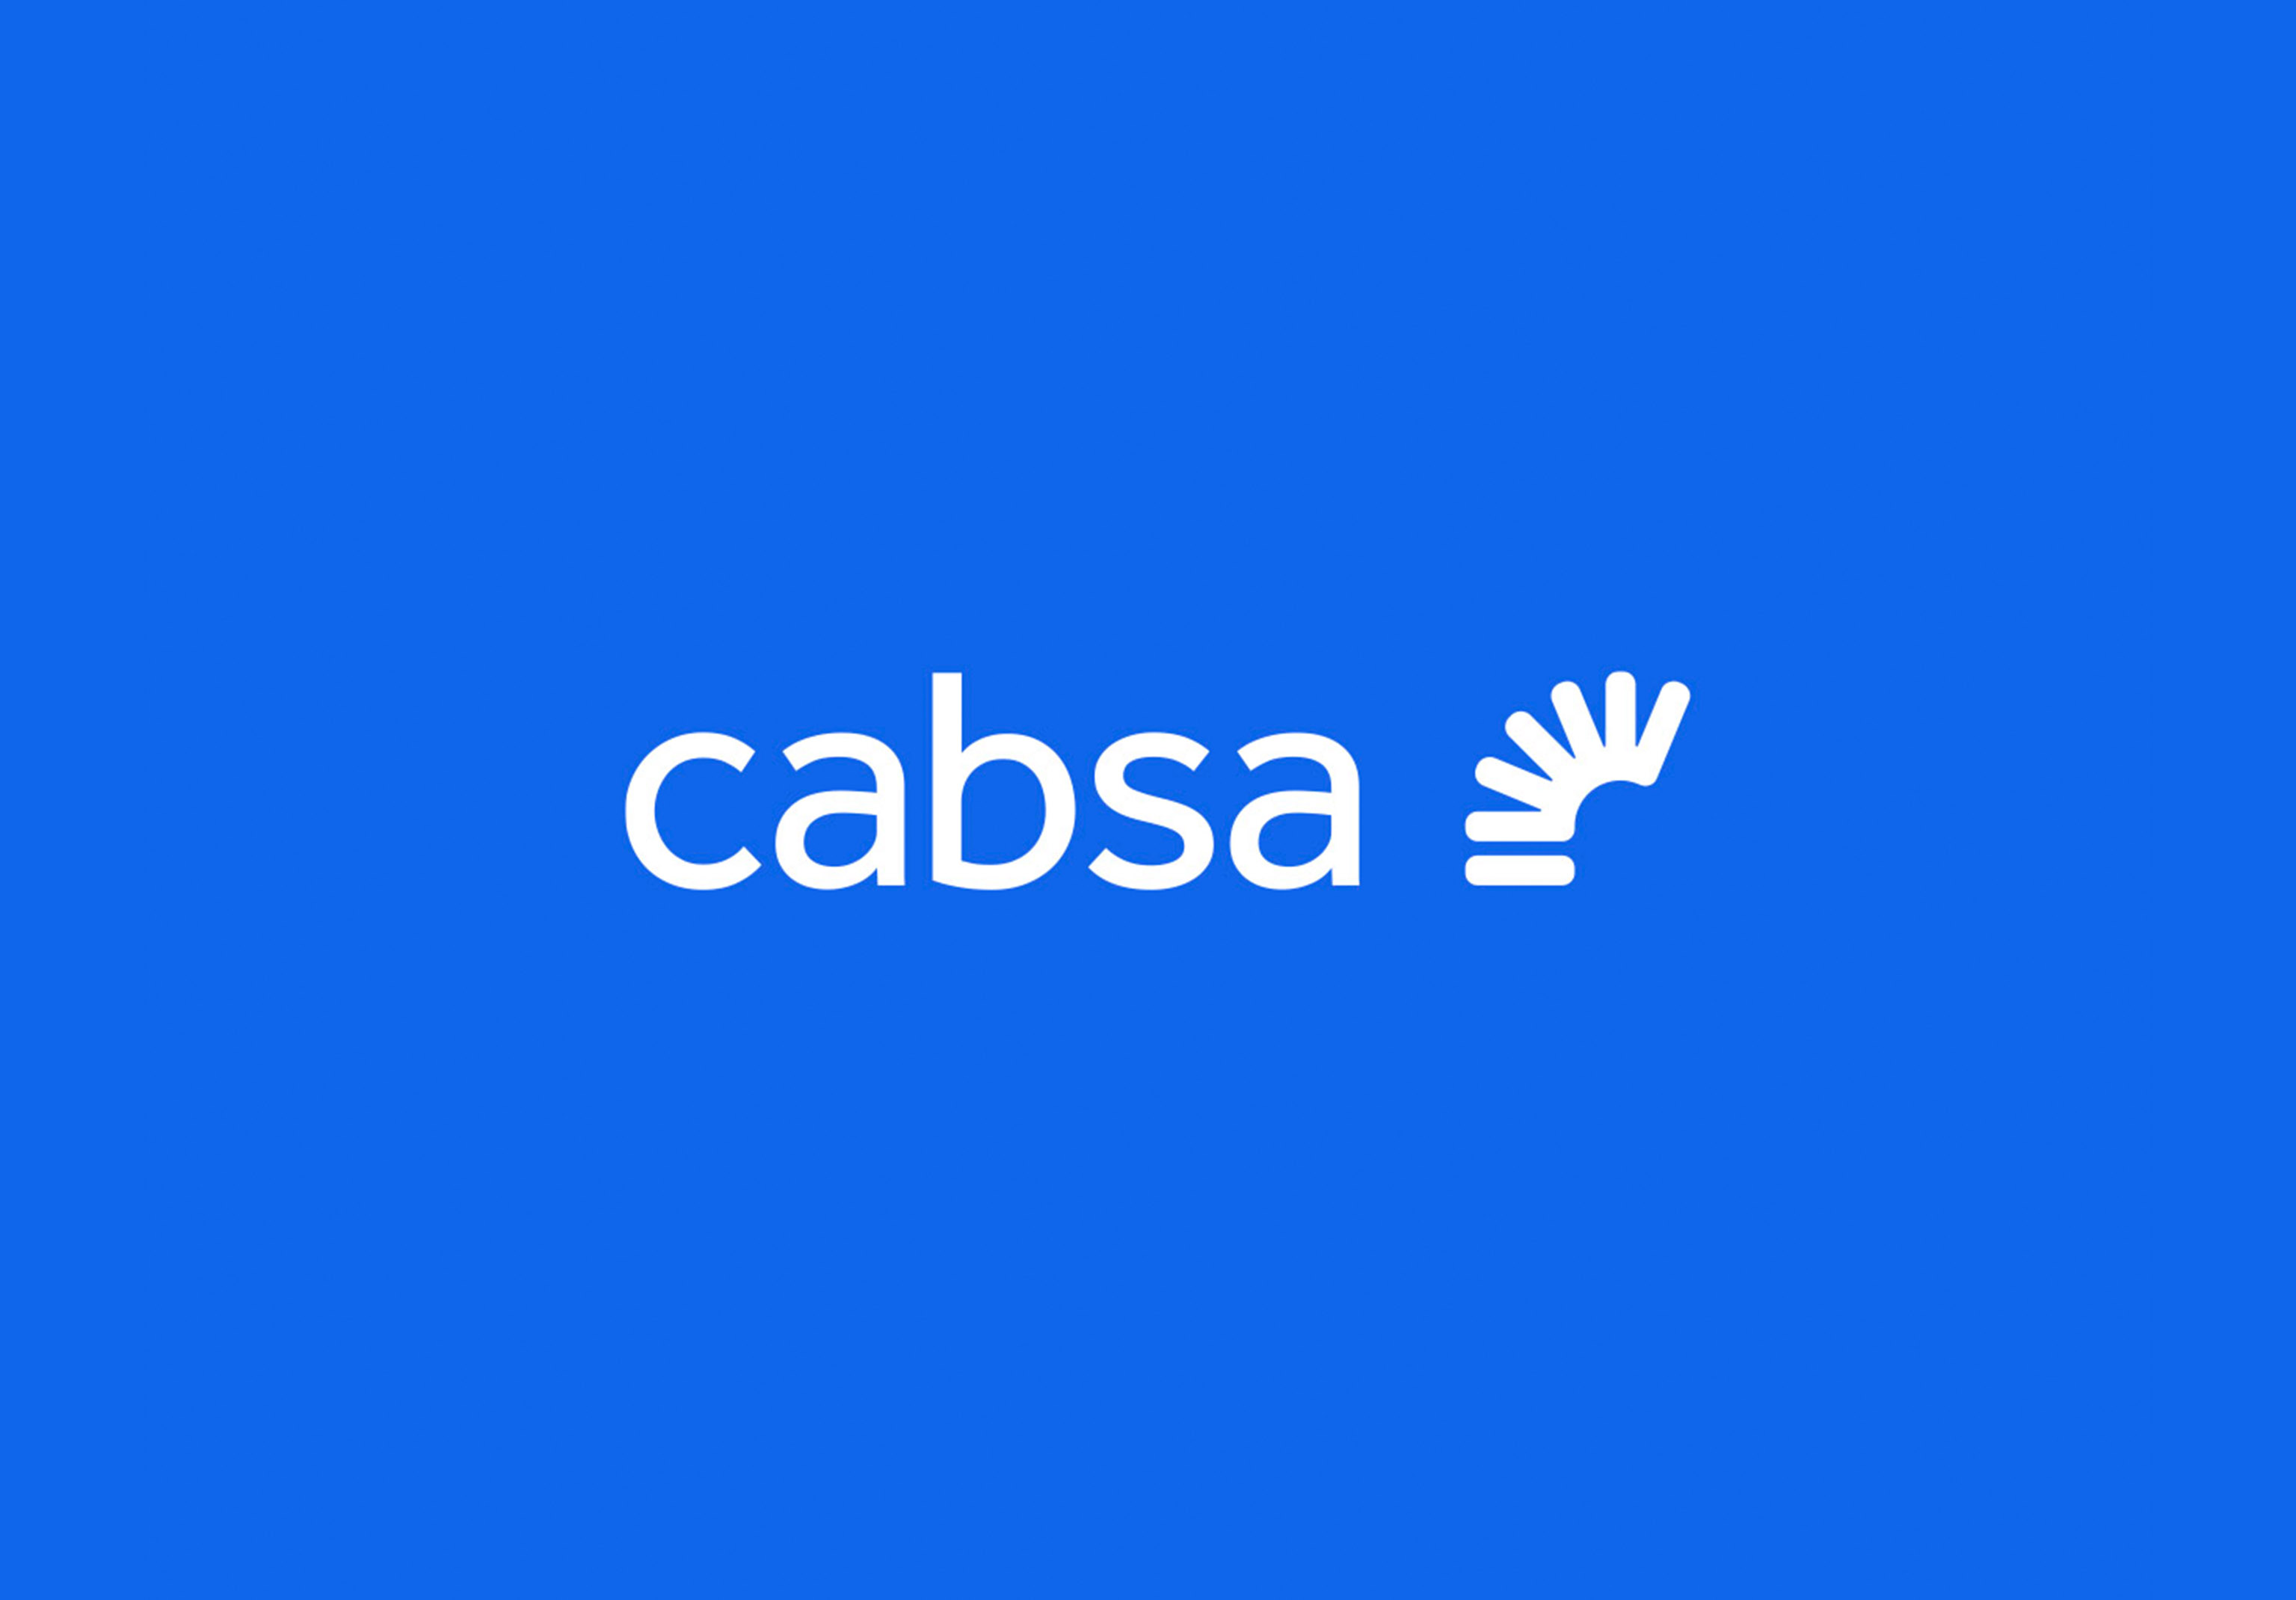 Cabsa – Coming soon